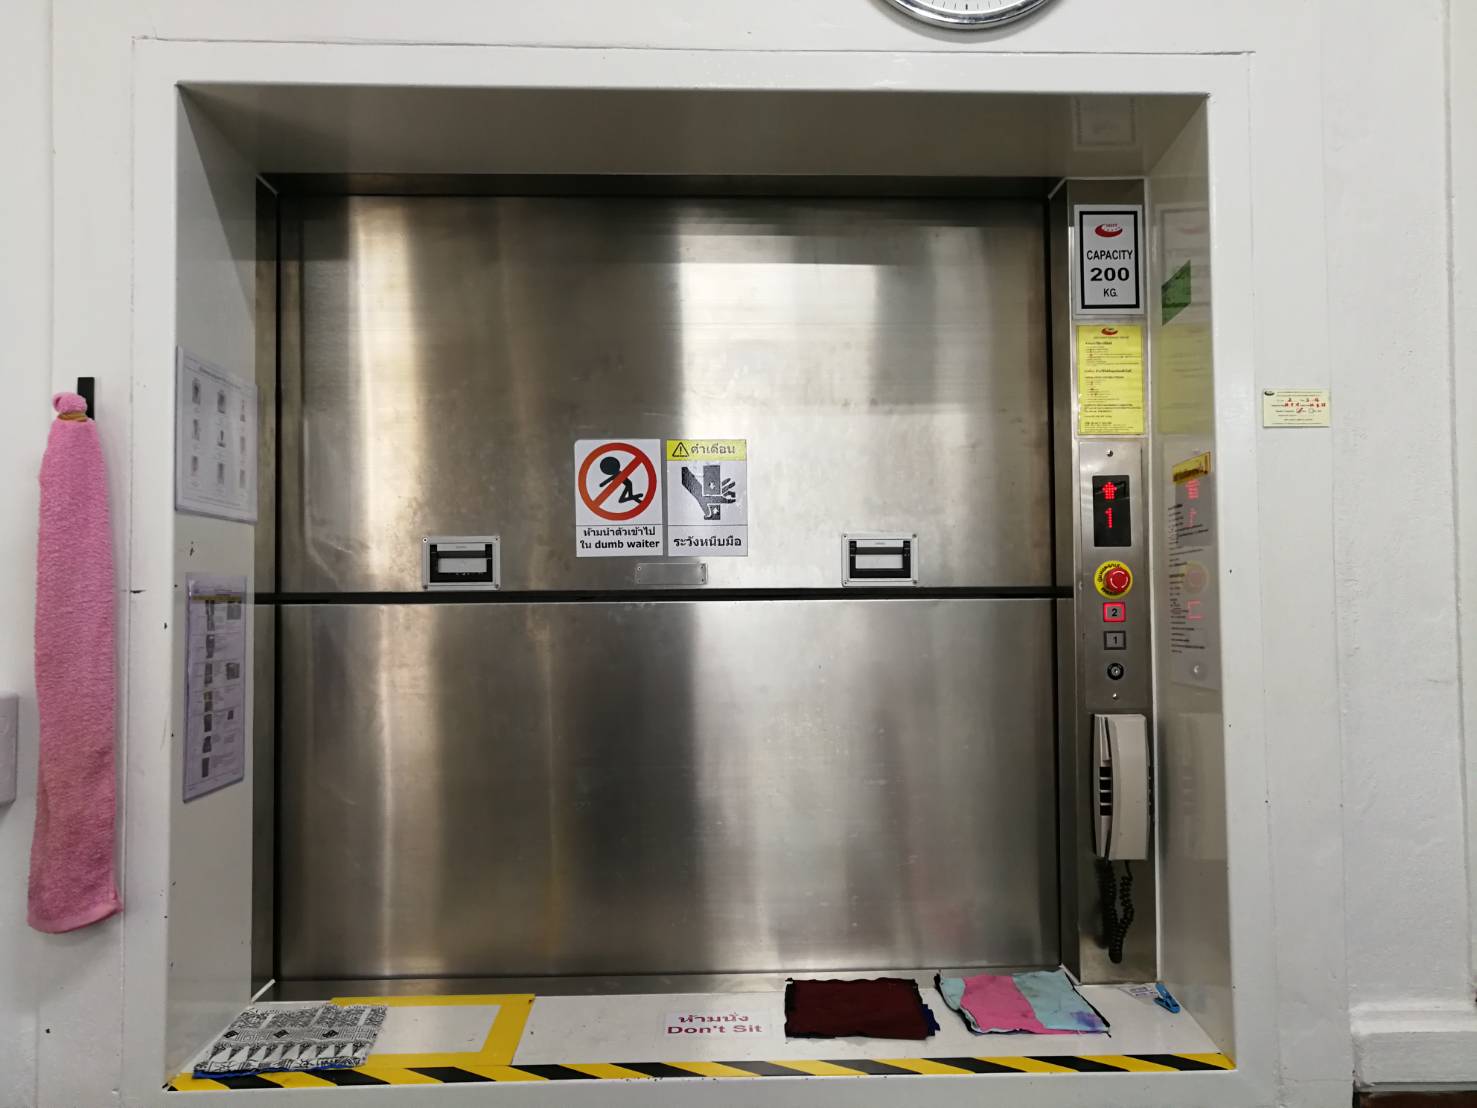 Dumbwaiter lift installation